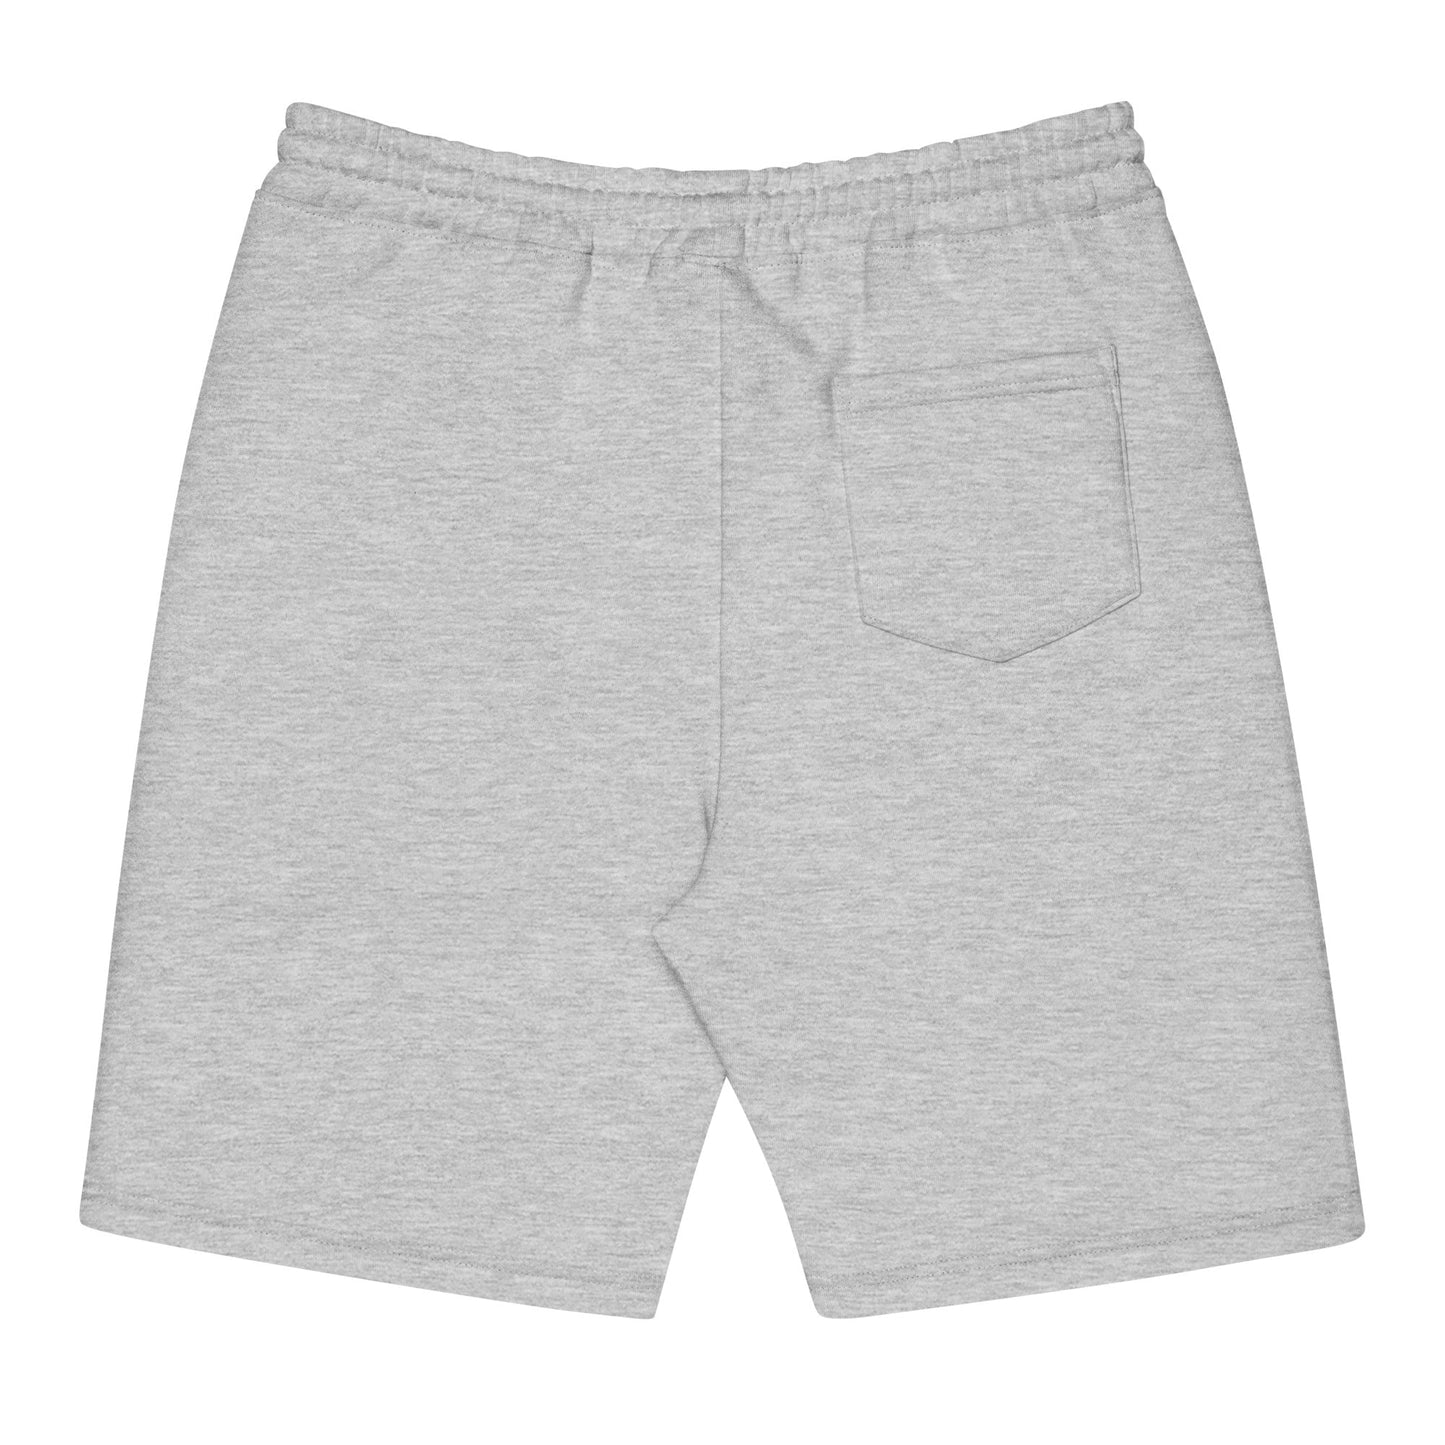 Men's Roses Embroidery fleece shorts - Wet Sundays